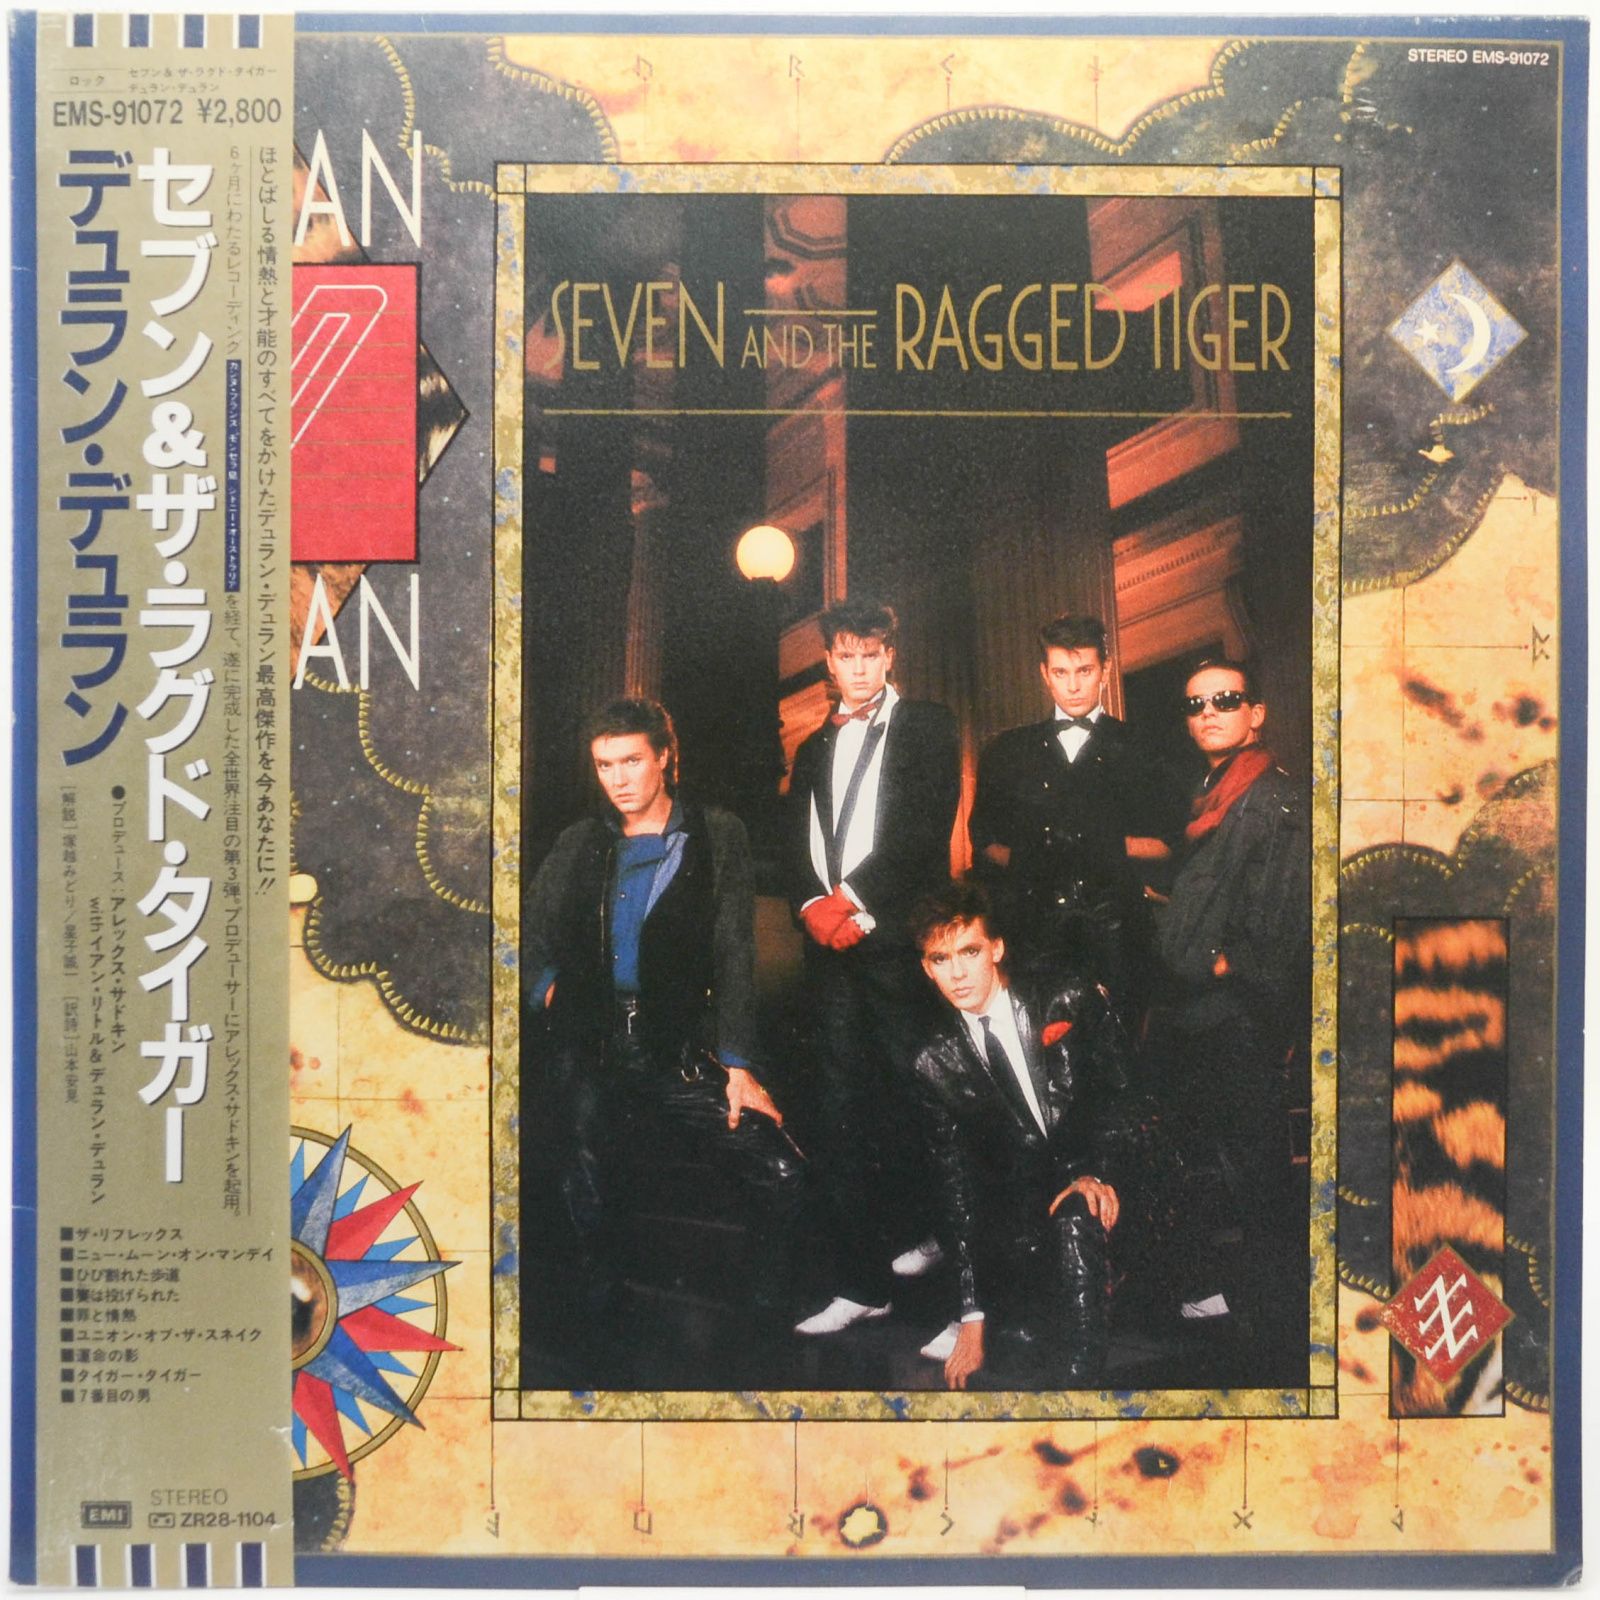 Duran Duran — Seven and the Ragged Tiger, 1984